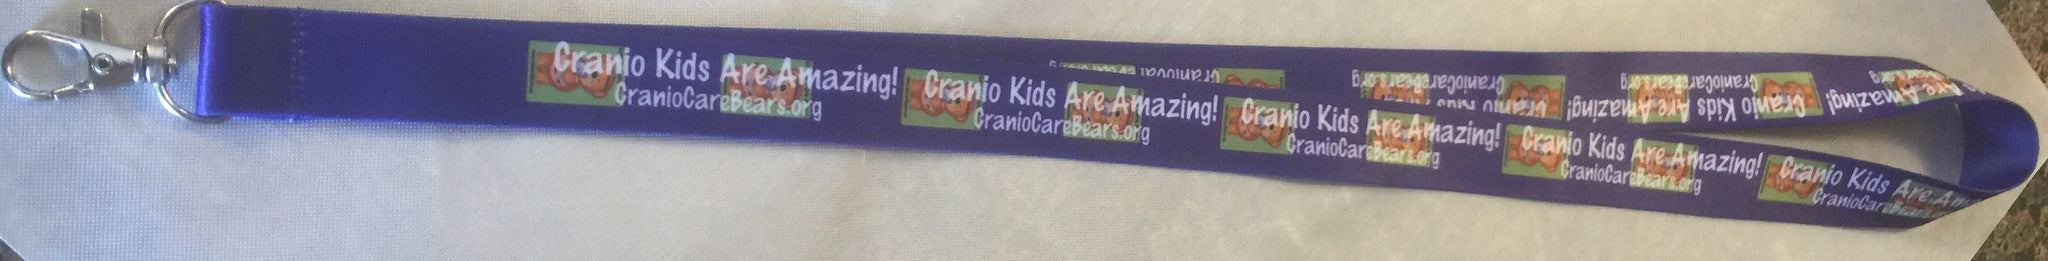 Cranio Kids Are Amazing Lanyard